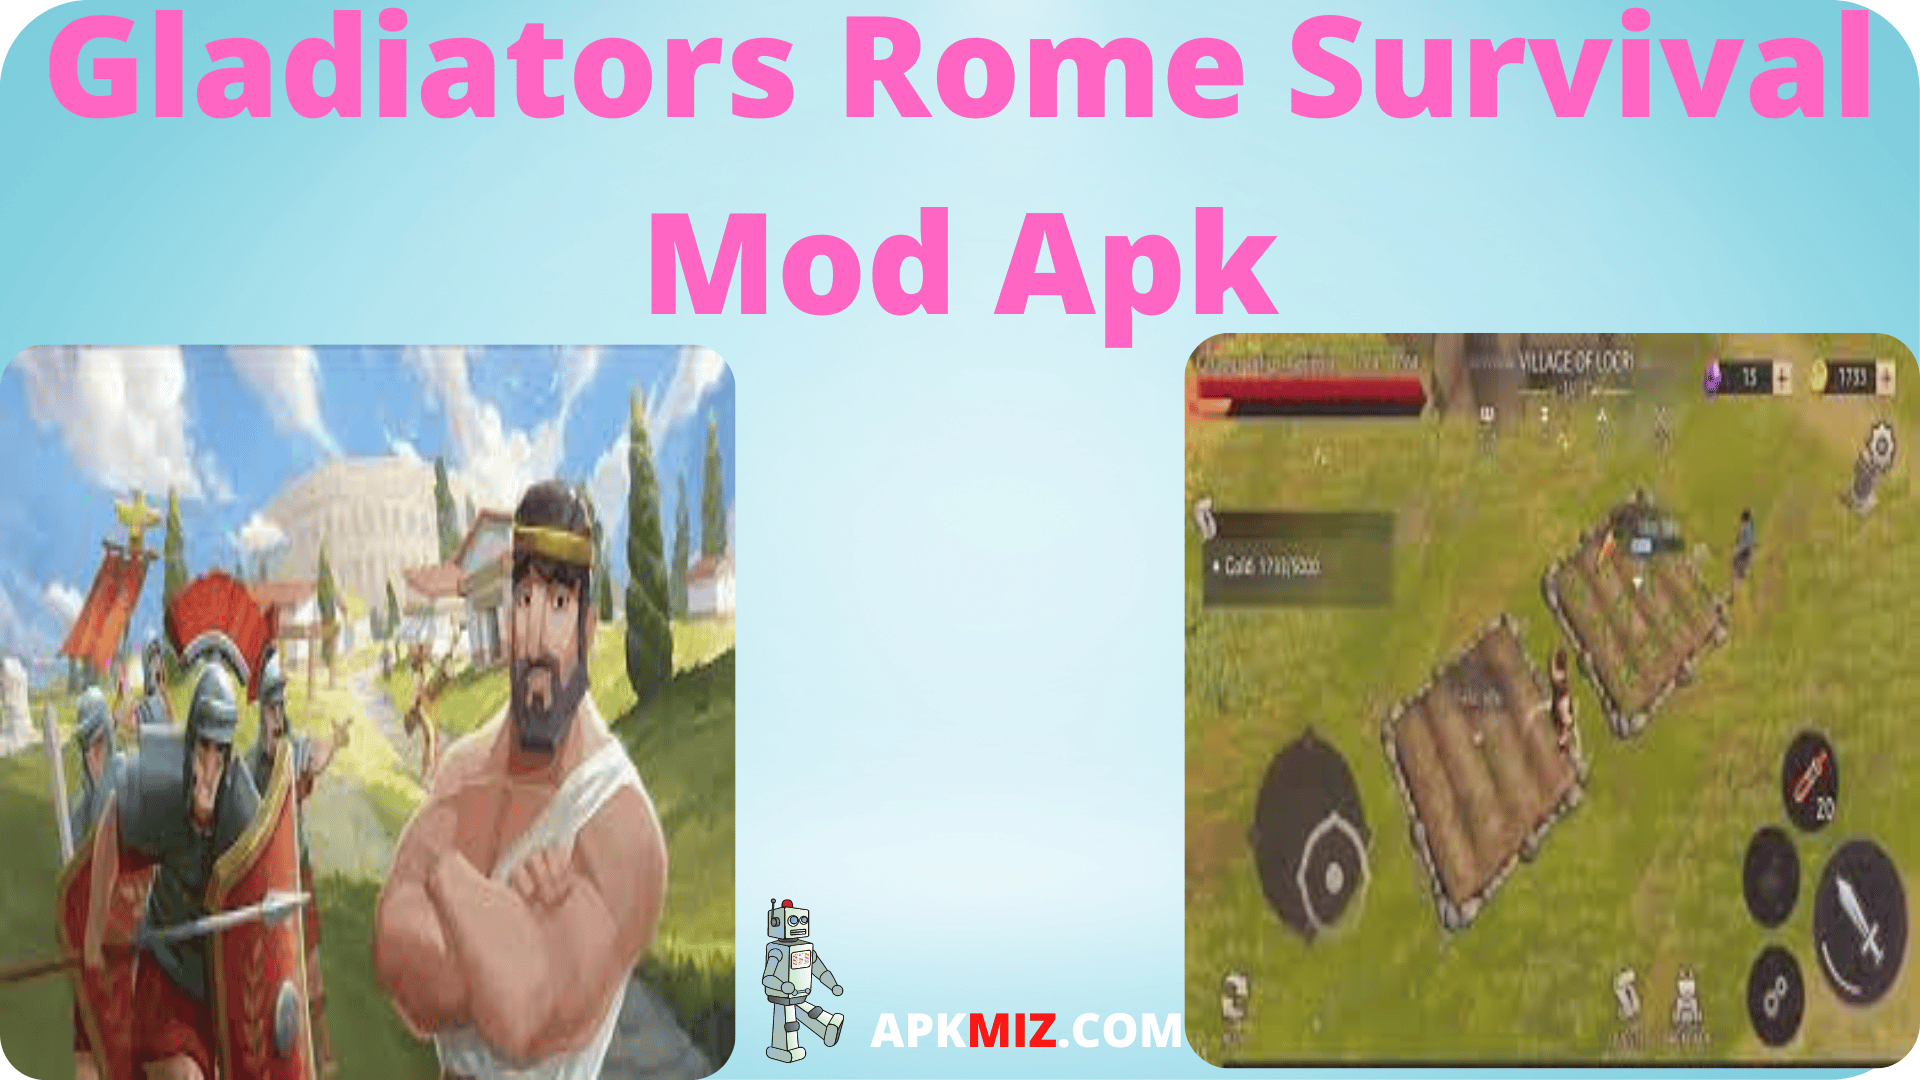 Gladiators Rome Survival Mod Apk